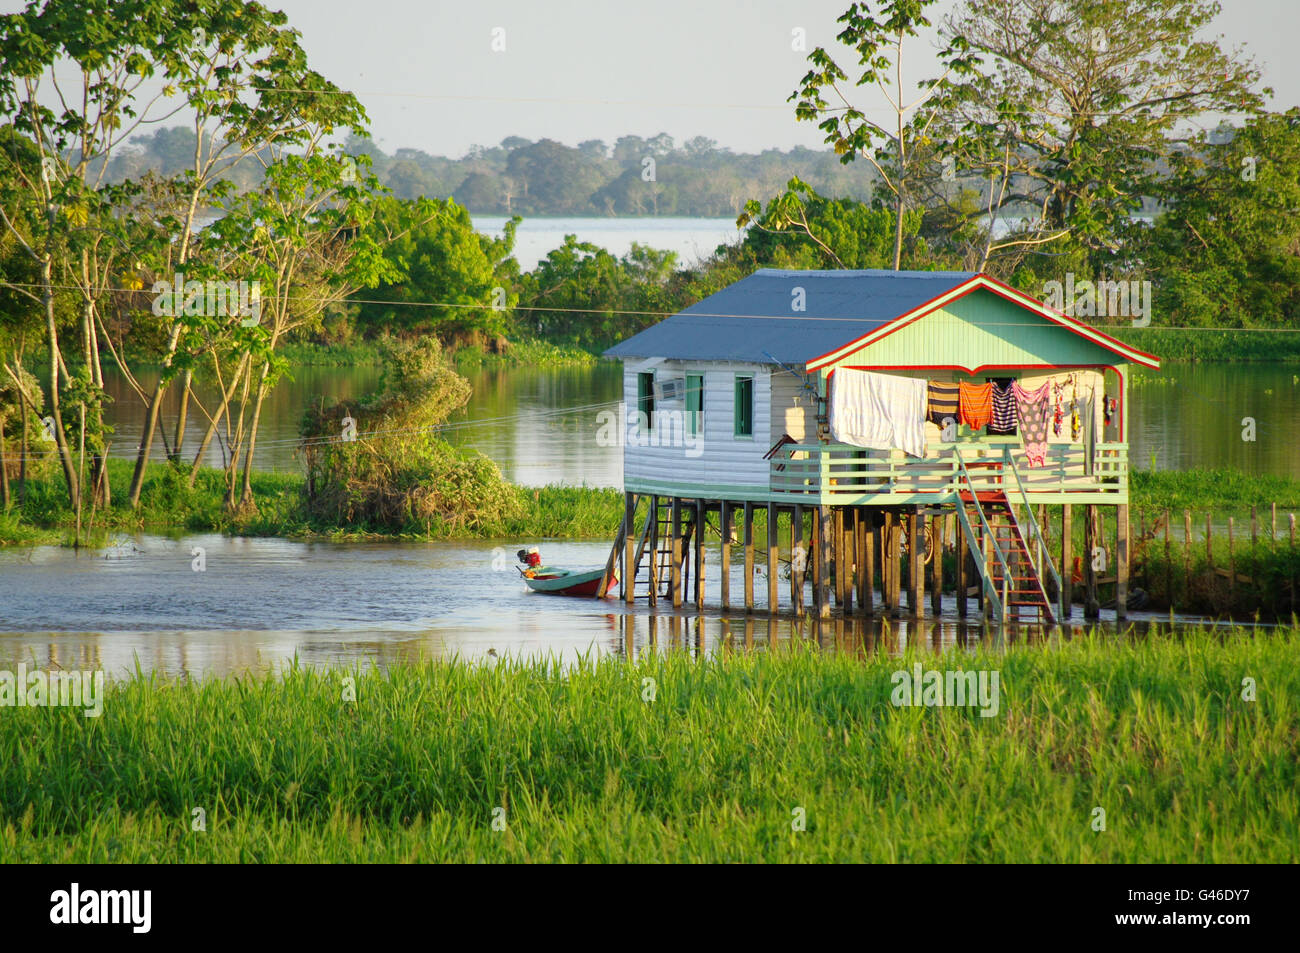 Stelzen-Haus auf dem Amazonas, Brasilien Stockfotografie - Alamy